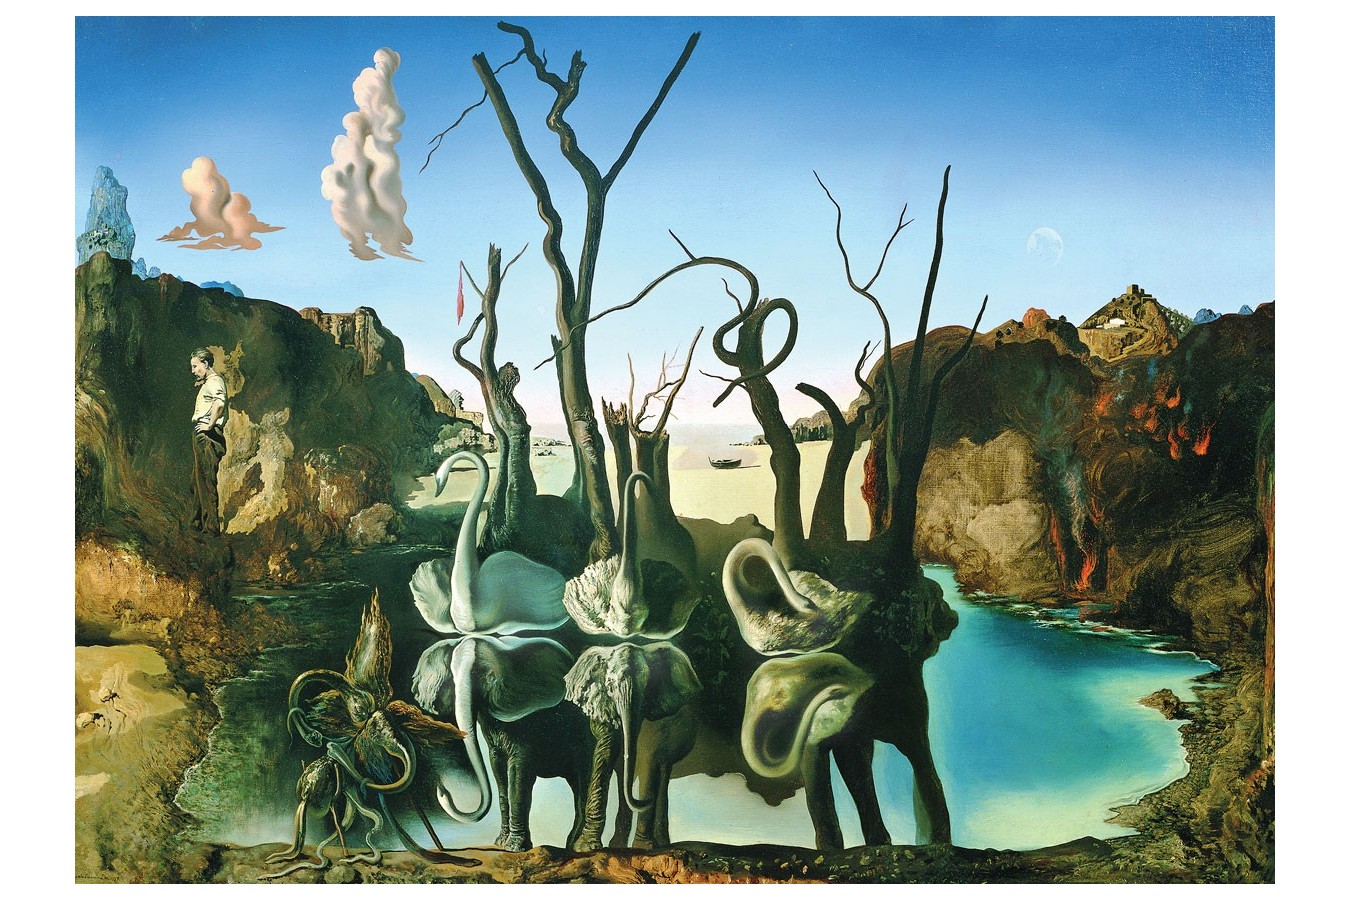 Puzzle Eurographics - Salvador Dali: Swans Reflecting Elephants, 1000 piese (6000-0846)